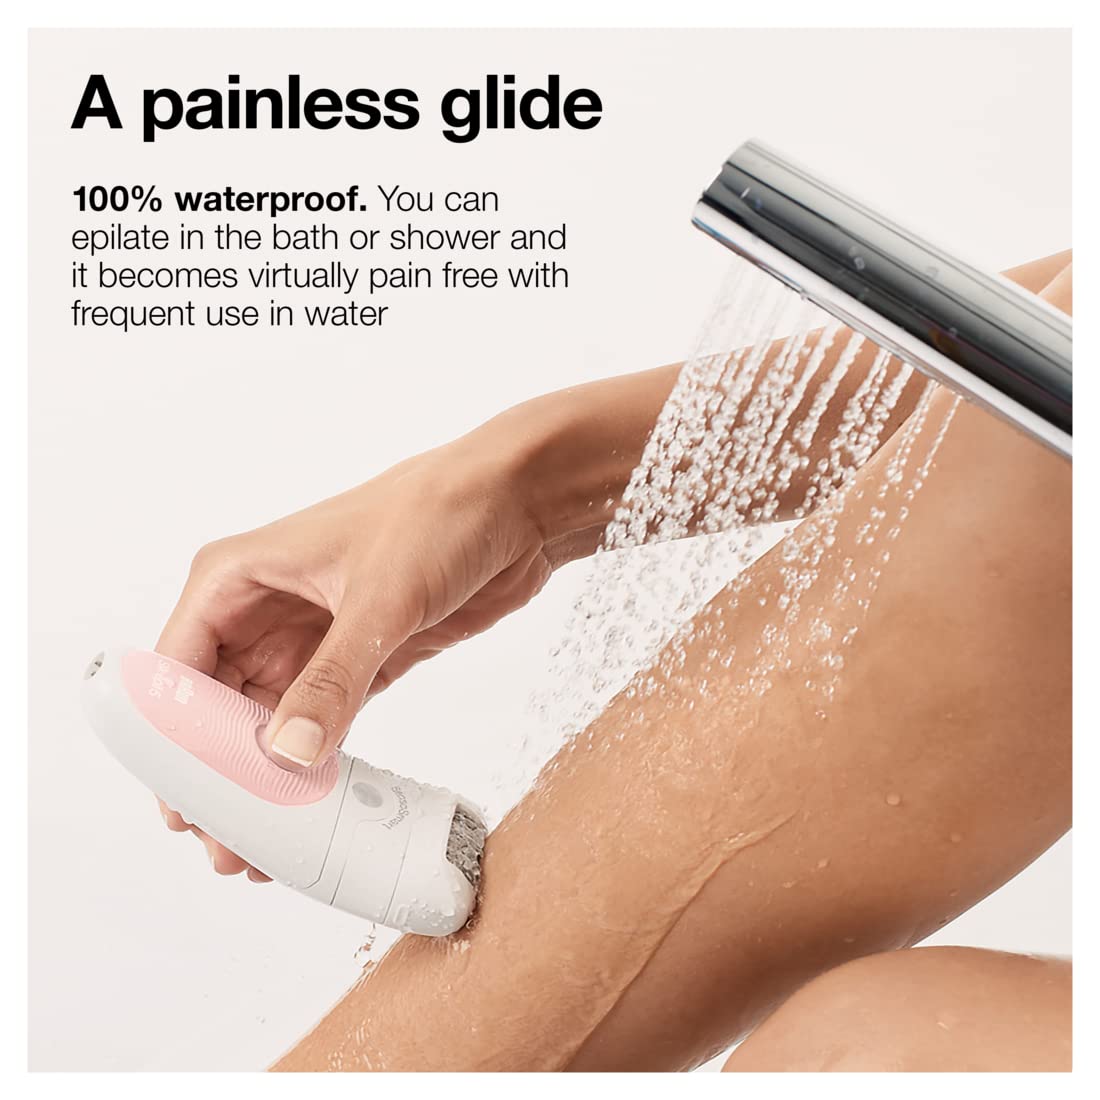 Braun Silk-épil 9 SkinSpa SensoSmart™ 9/980 Wet & Dry epilator